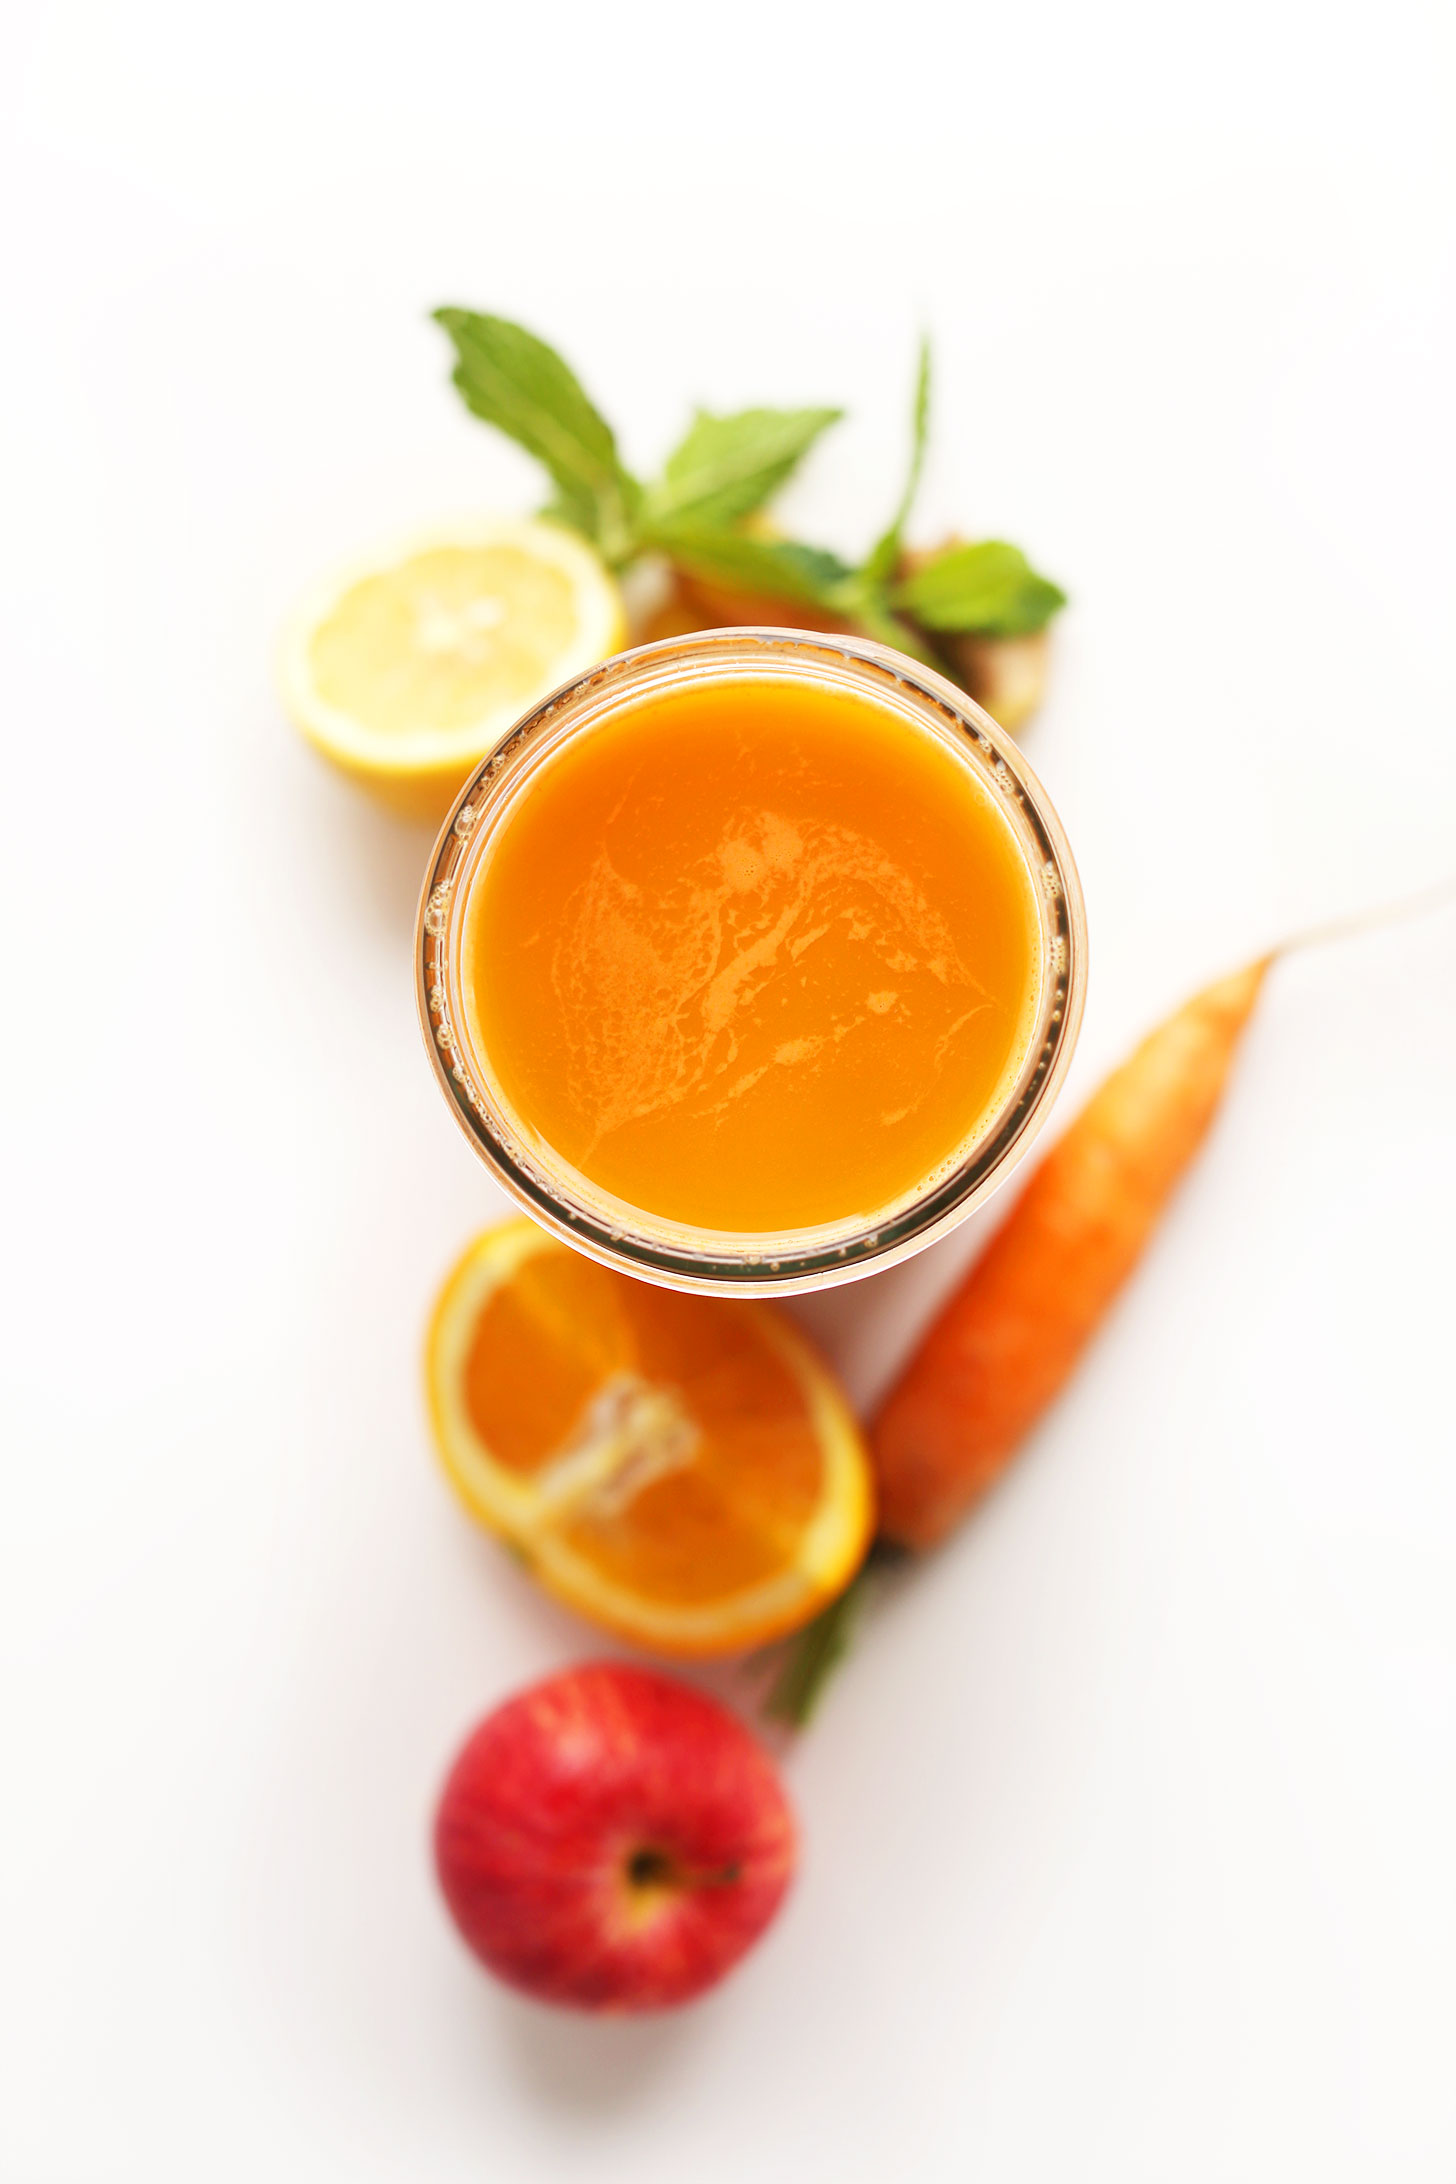 Best Machine To Make Fresh Orange Juice